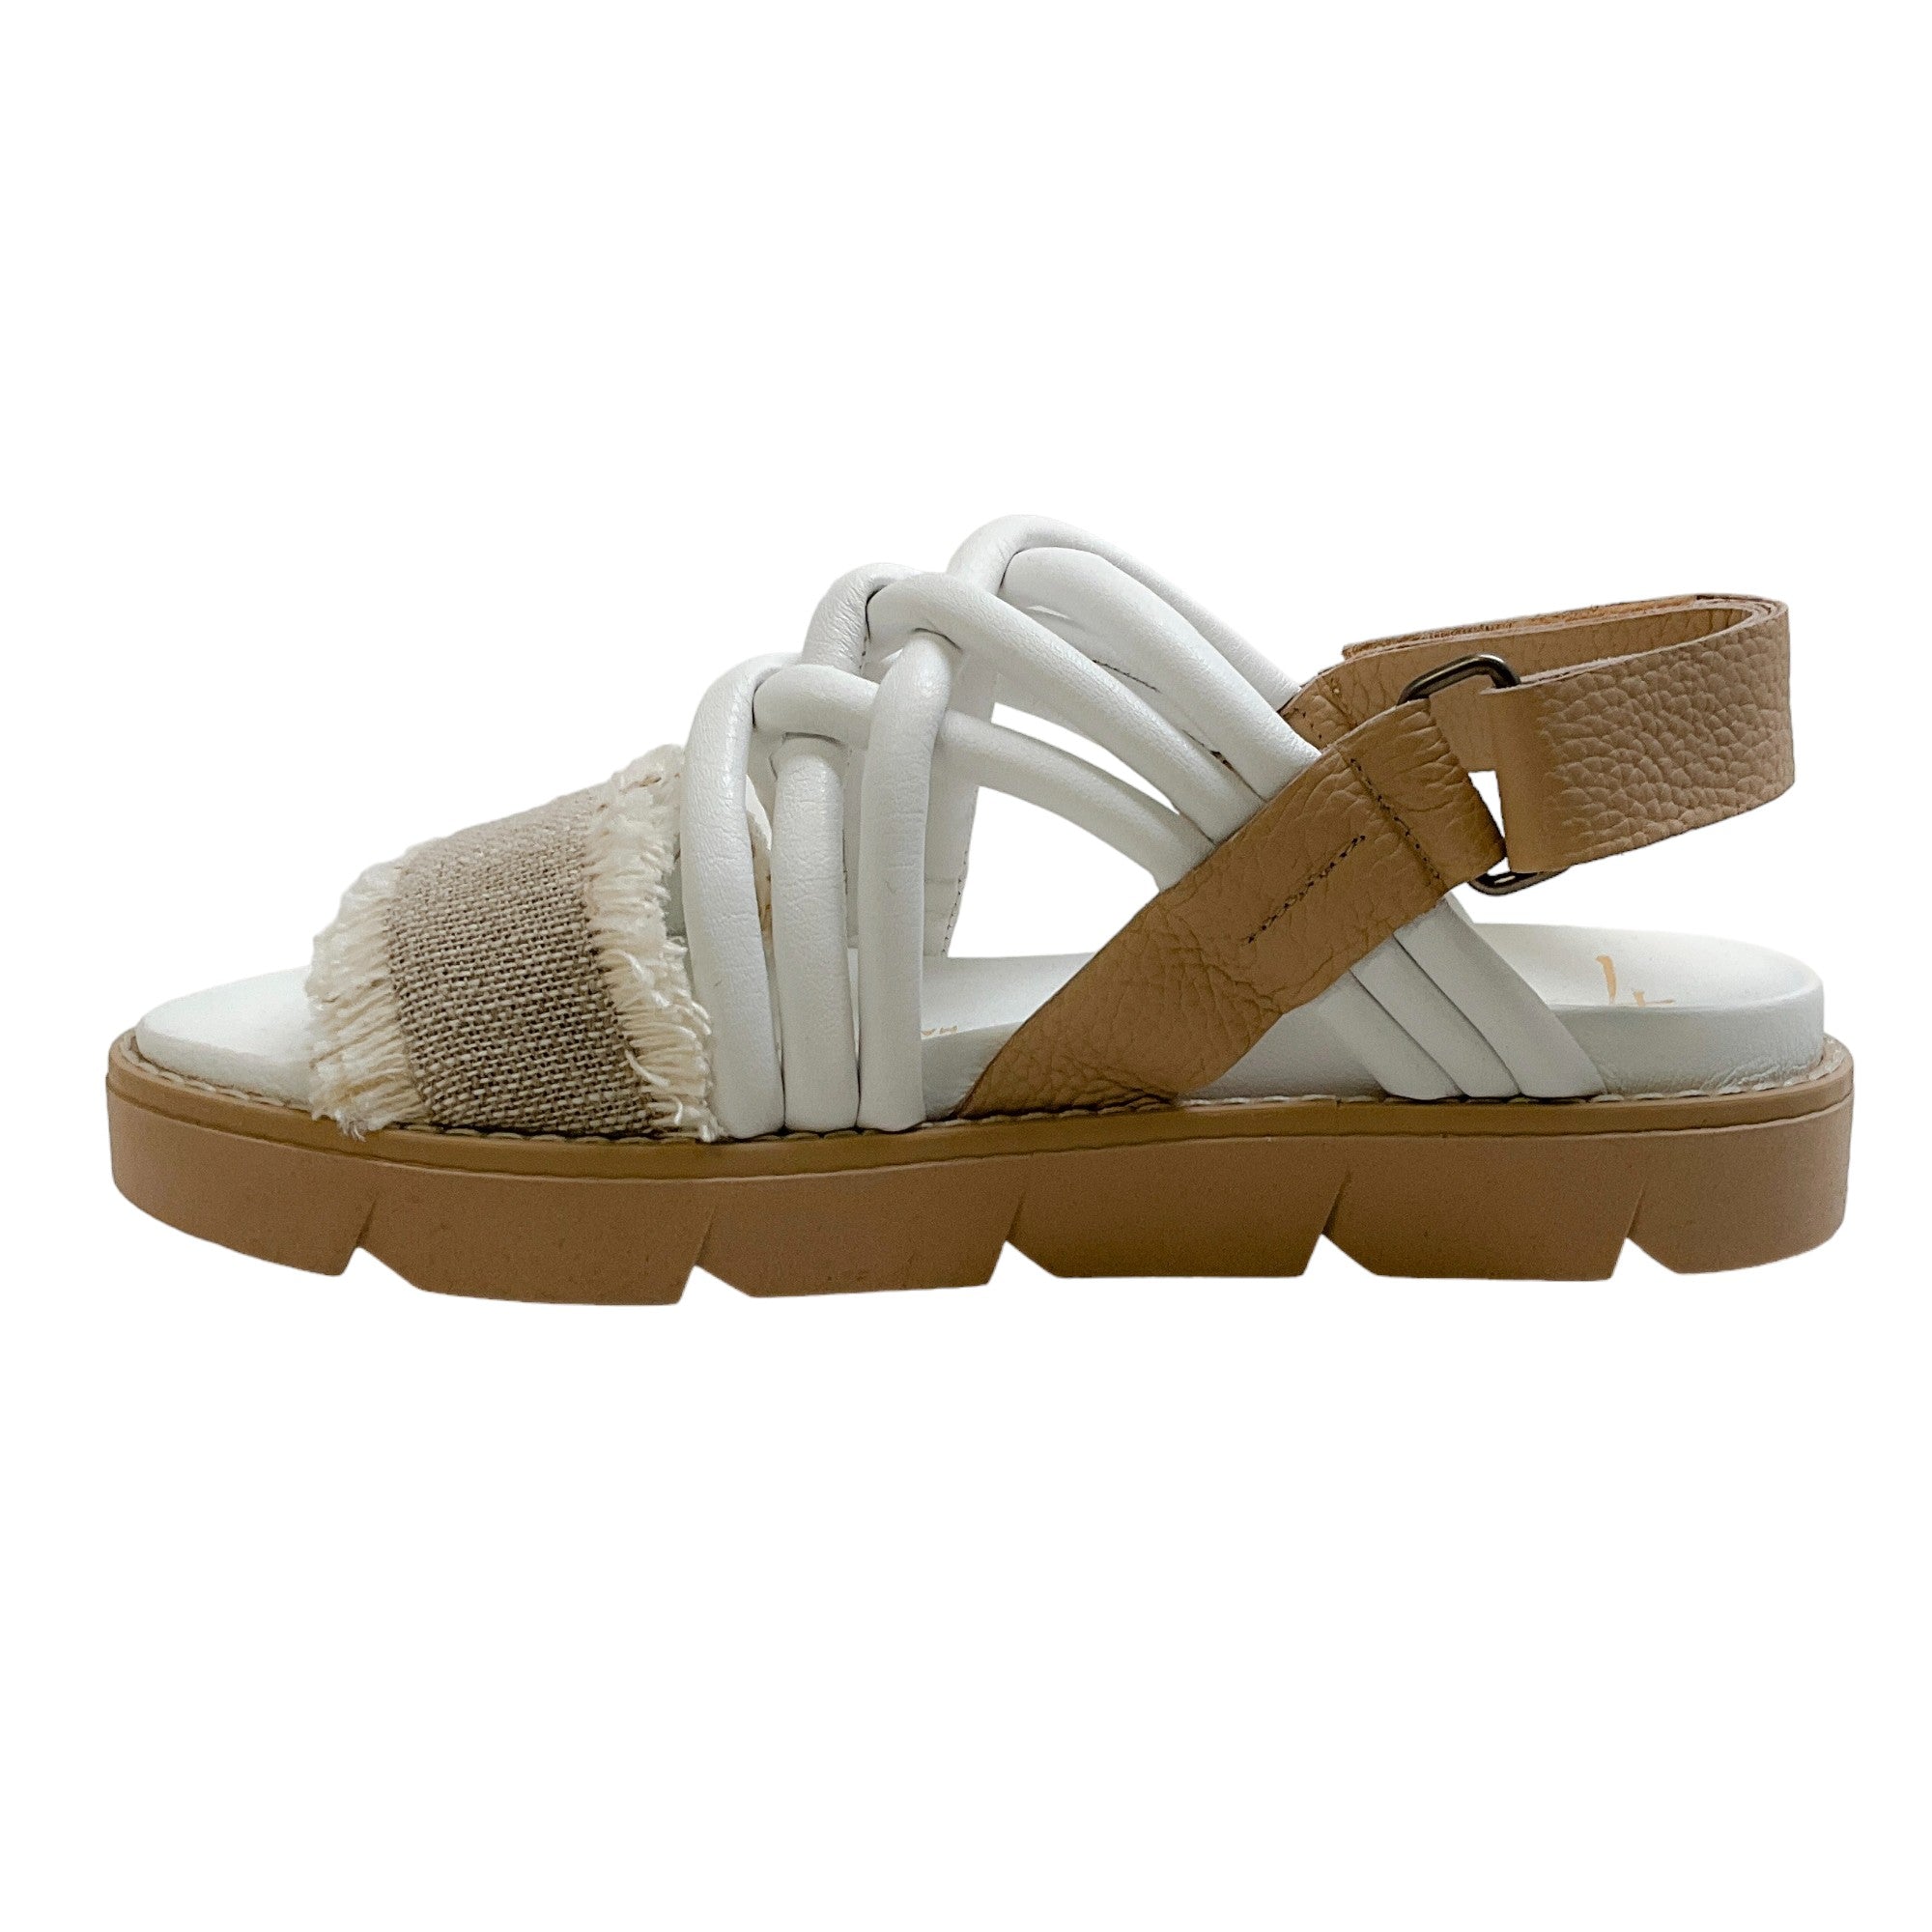 Henry Beguelin White / Beige Sabbia Intreccio Sandals